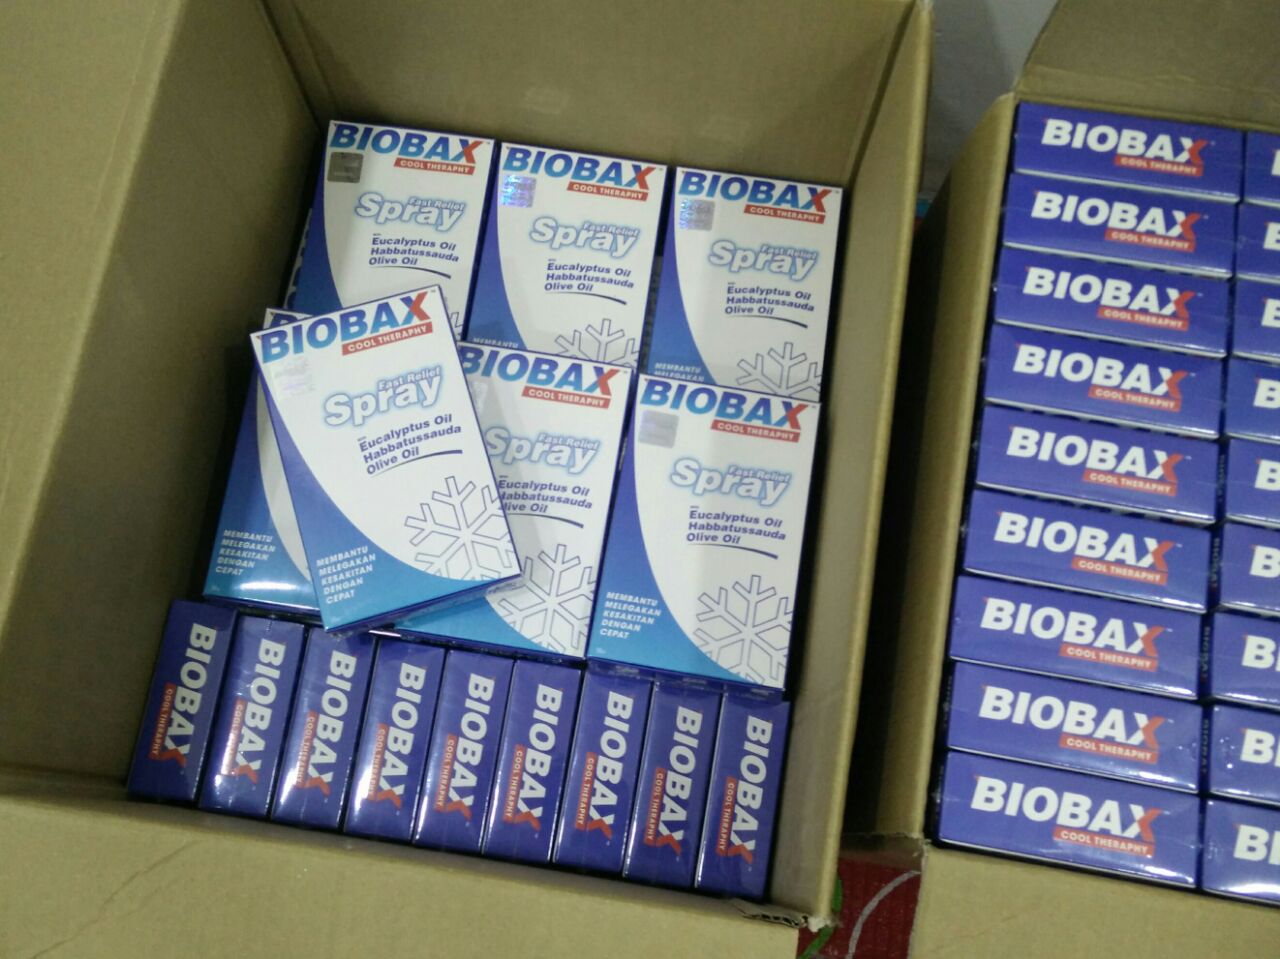 Biobax COOL Theraphy Malaysia [ LULUS KKM ]